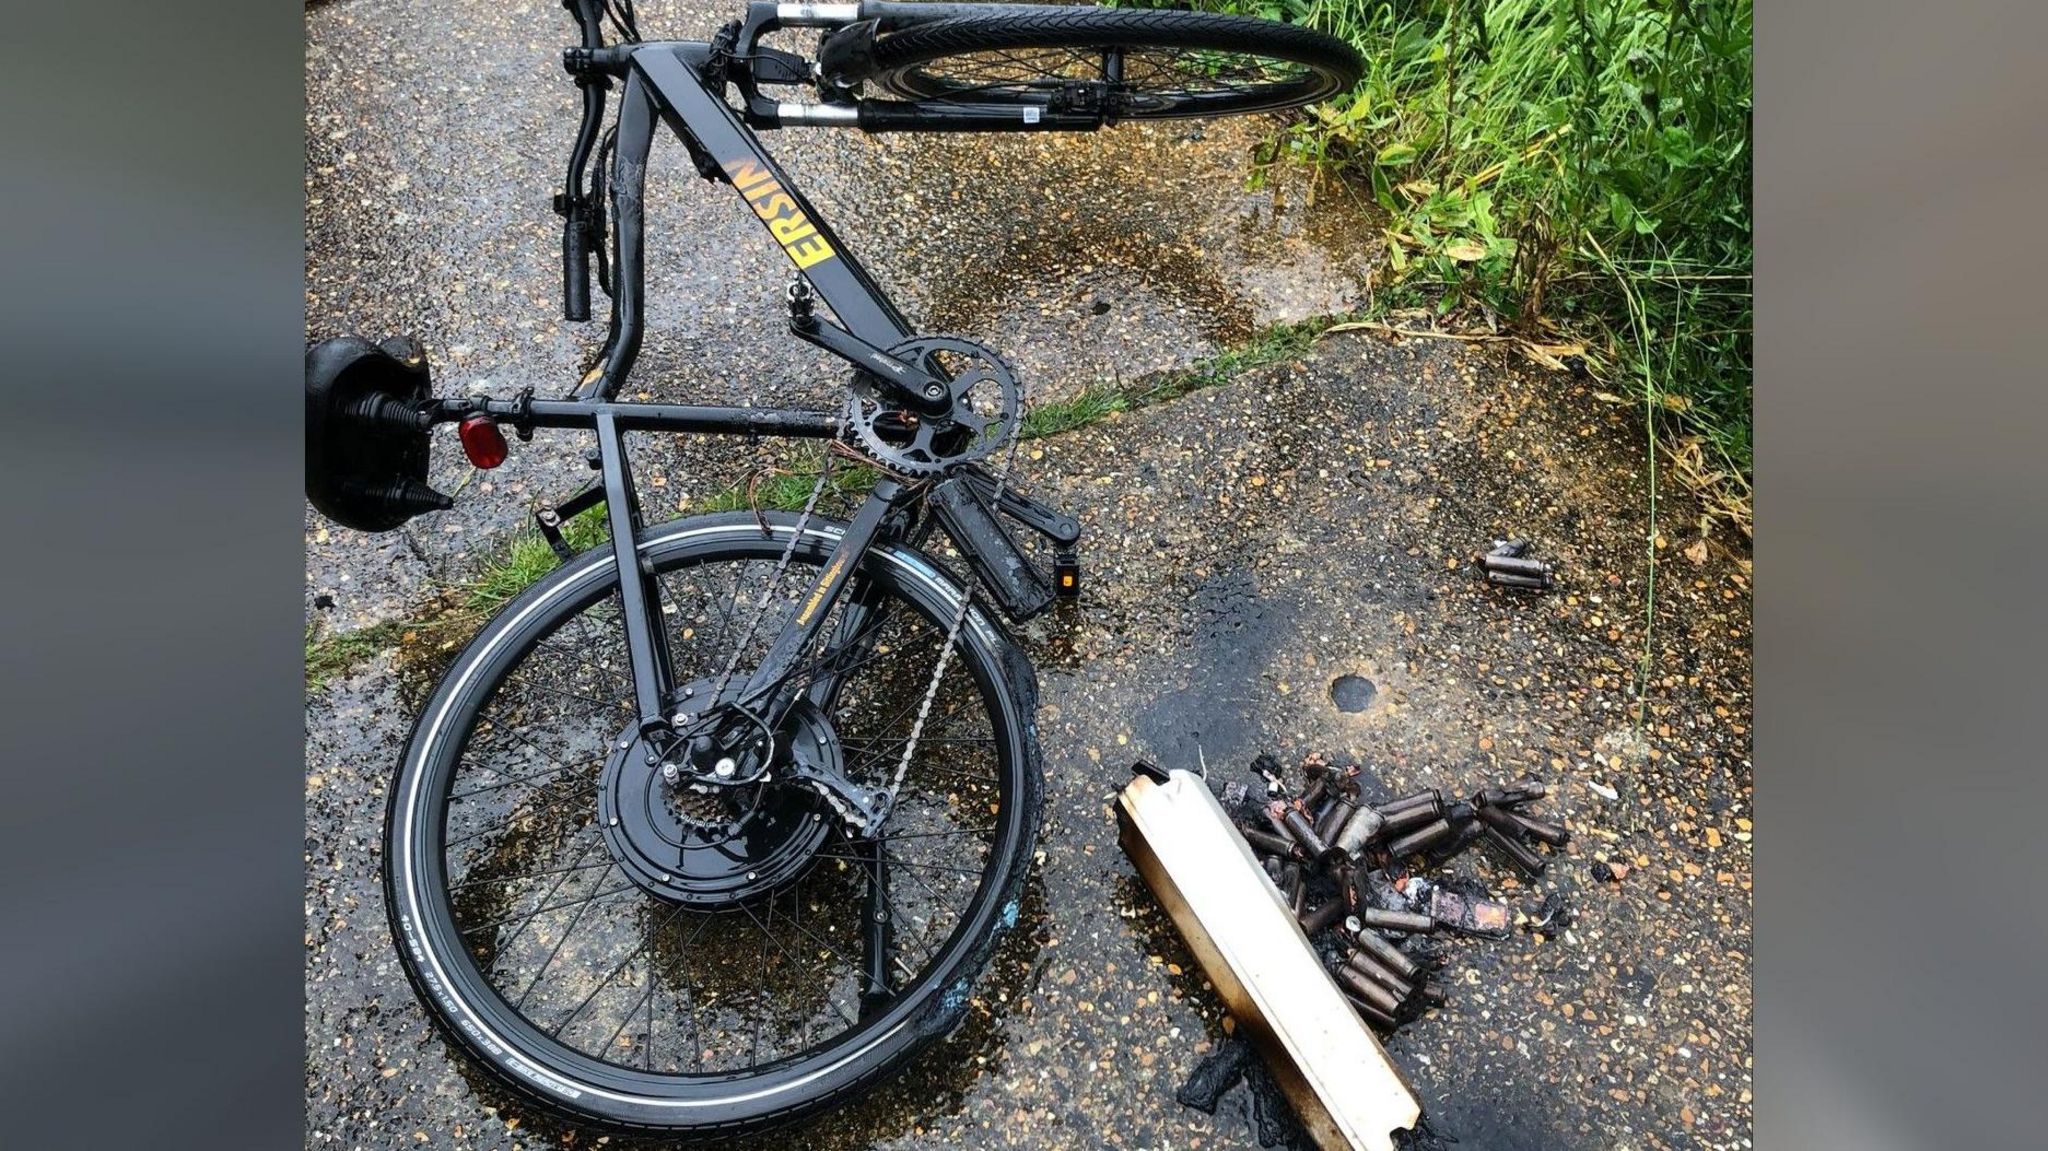 A damaged e-bike with burned parts 